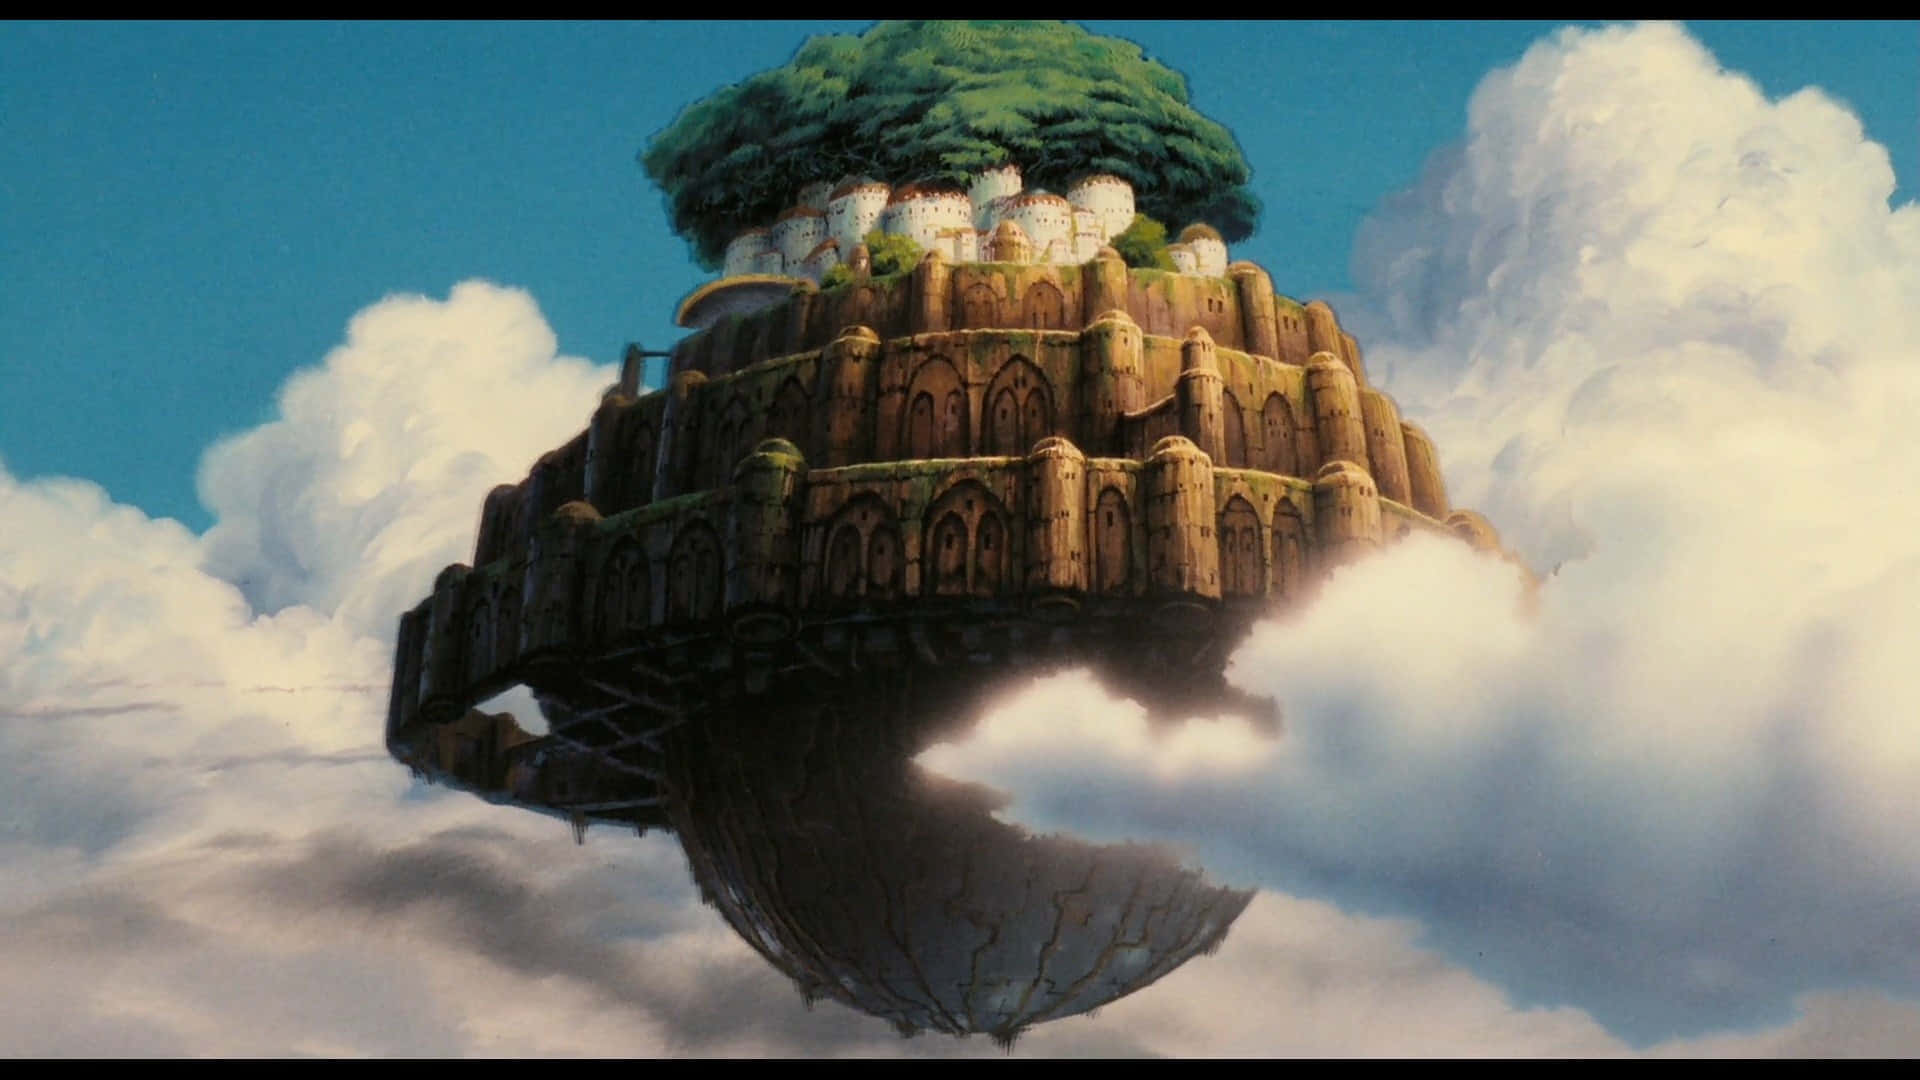 Explore the Fantasy Flying Laputa Castle in the Sky Wallpaper